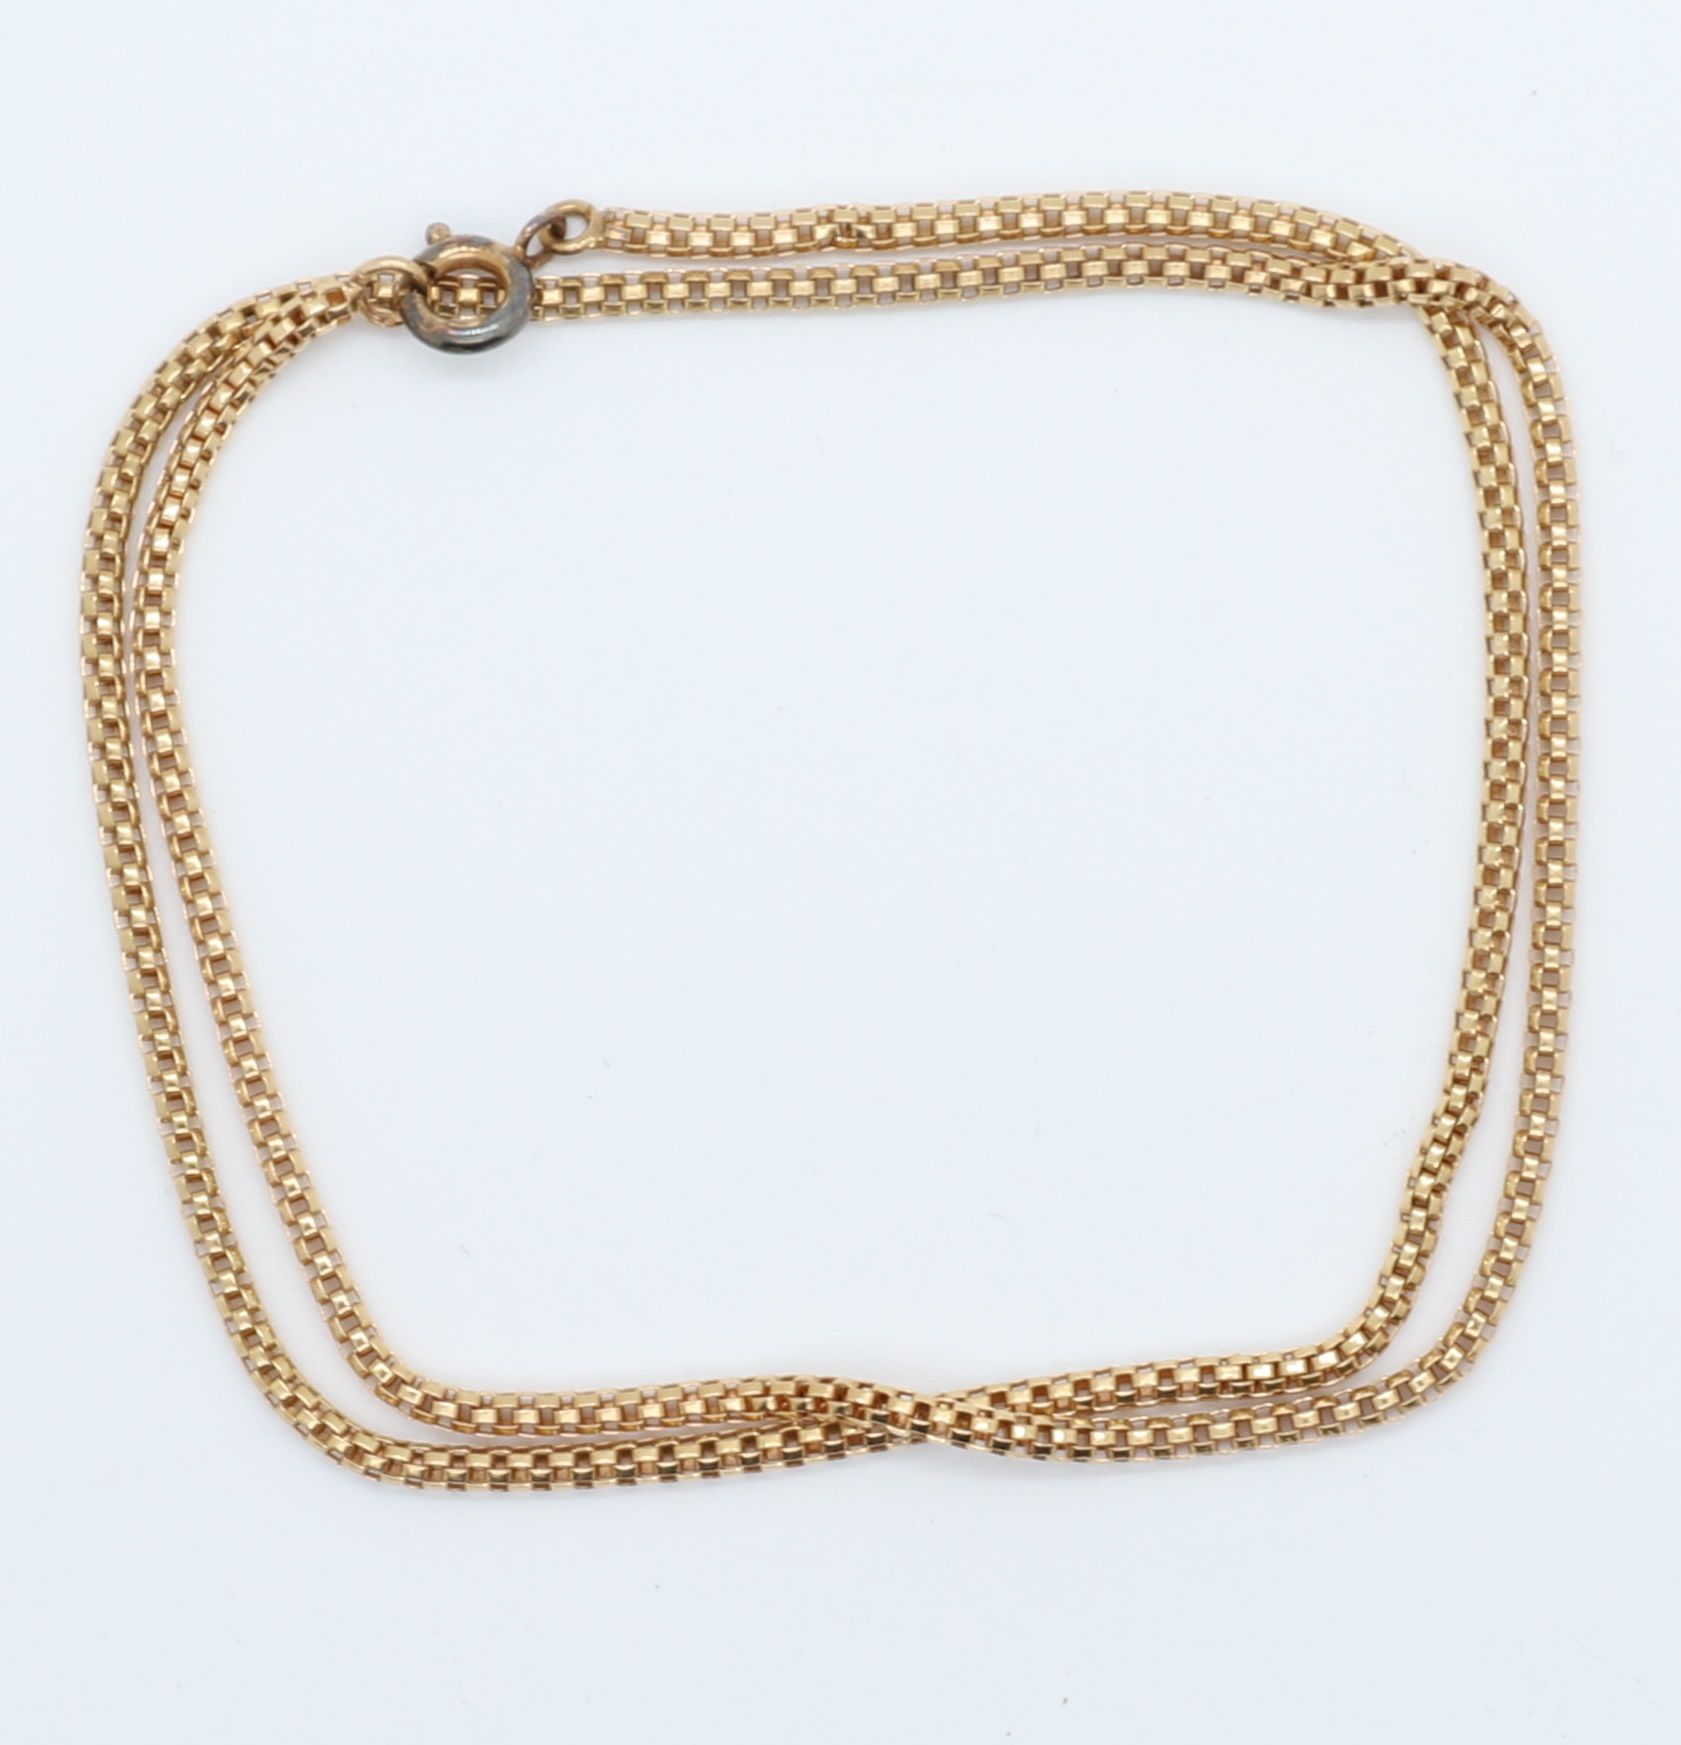 Null 黄金圆环链
长：40厘米
重量 : 5,8 grs
佩戴在链扣上